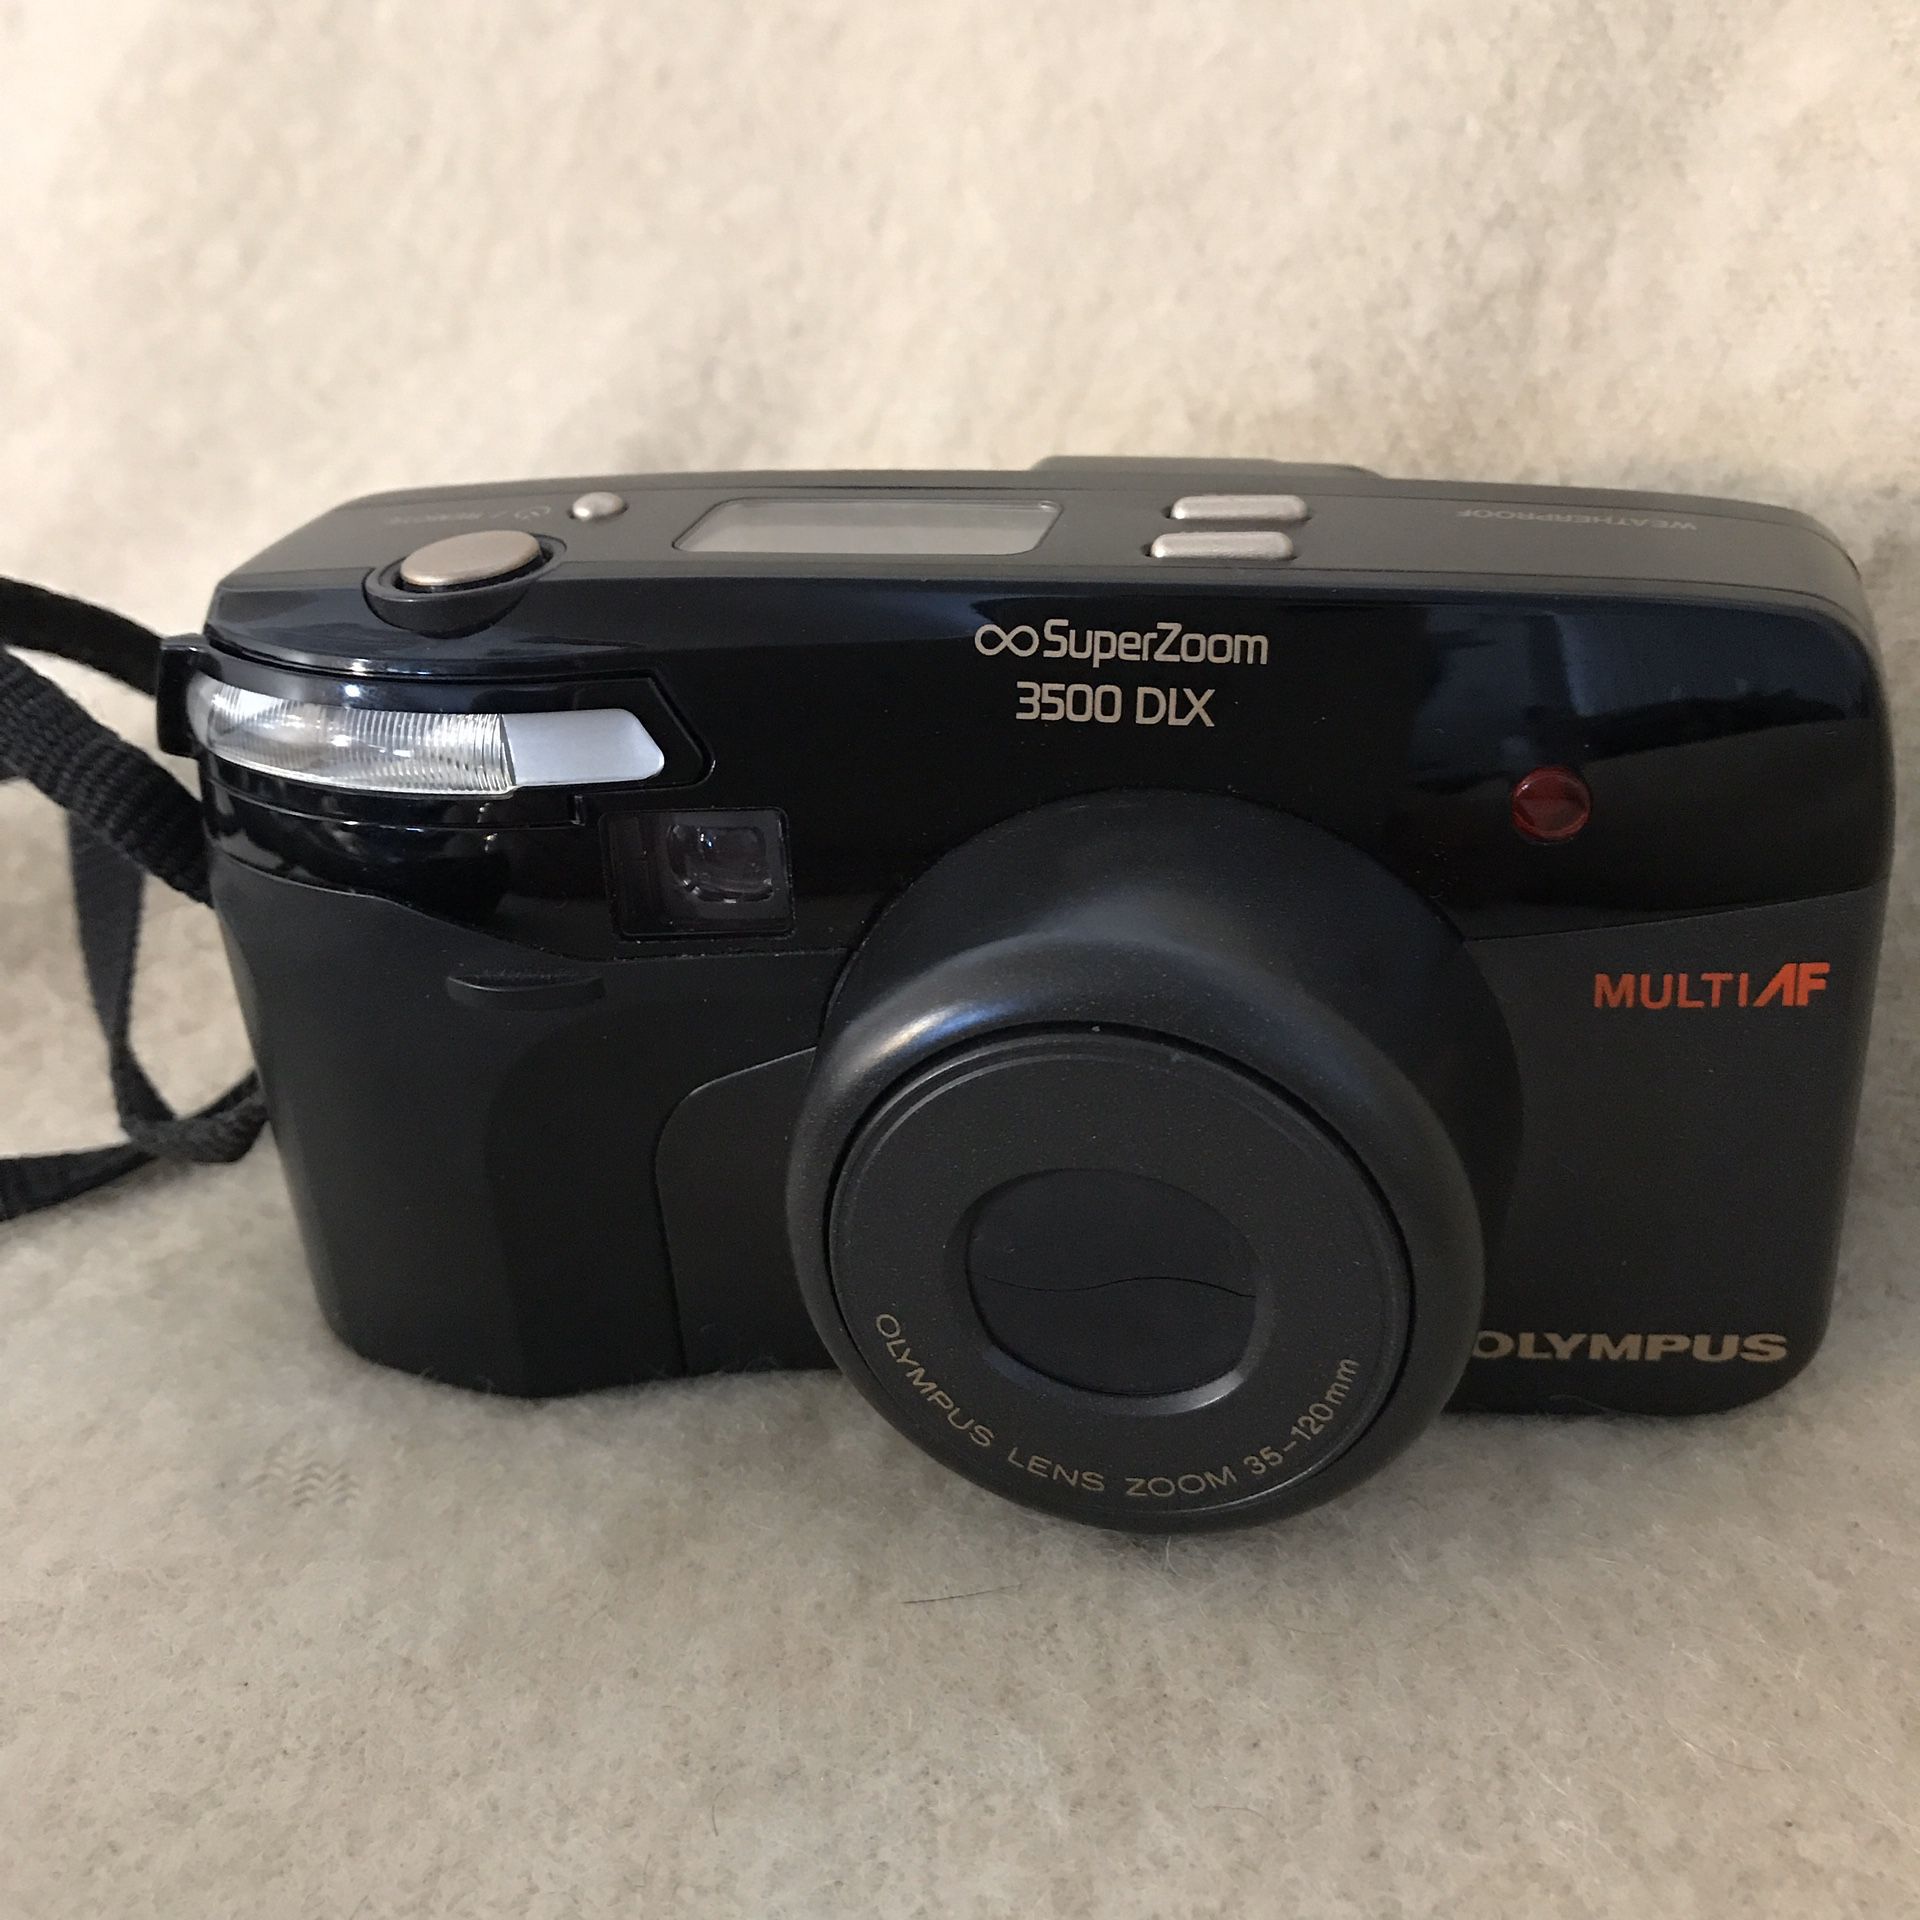 Olympus Super Zoom 3500 DLX 35mm Film Camera